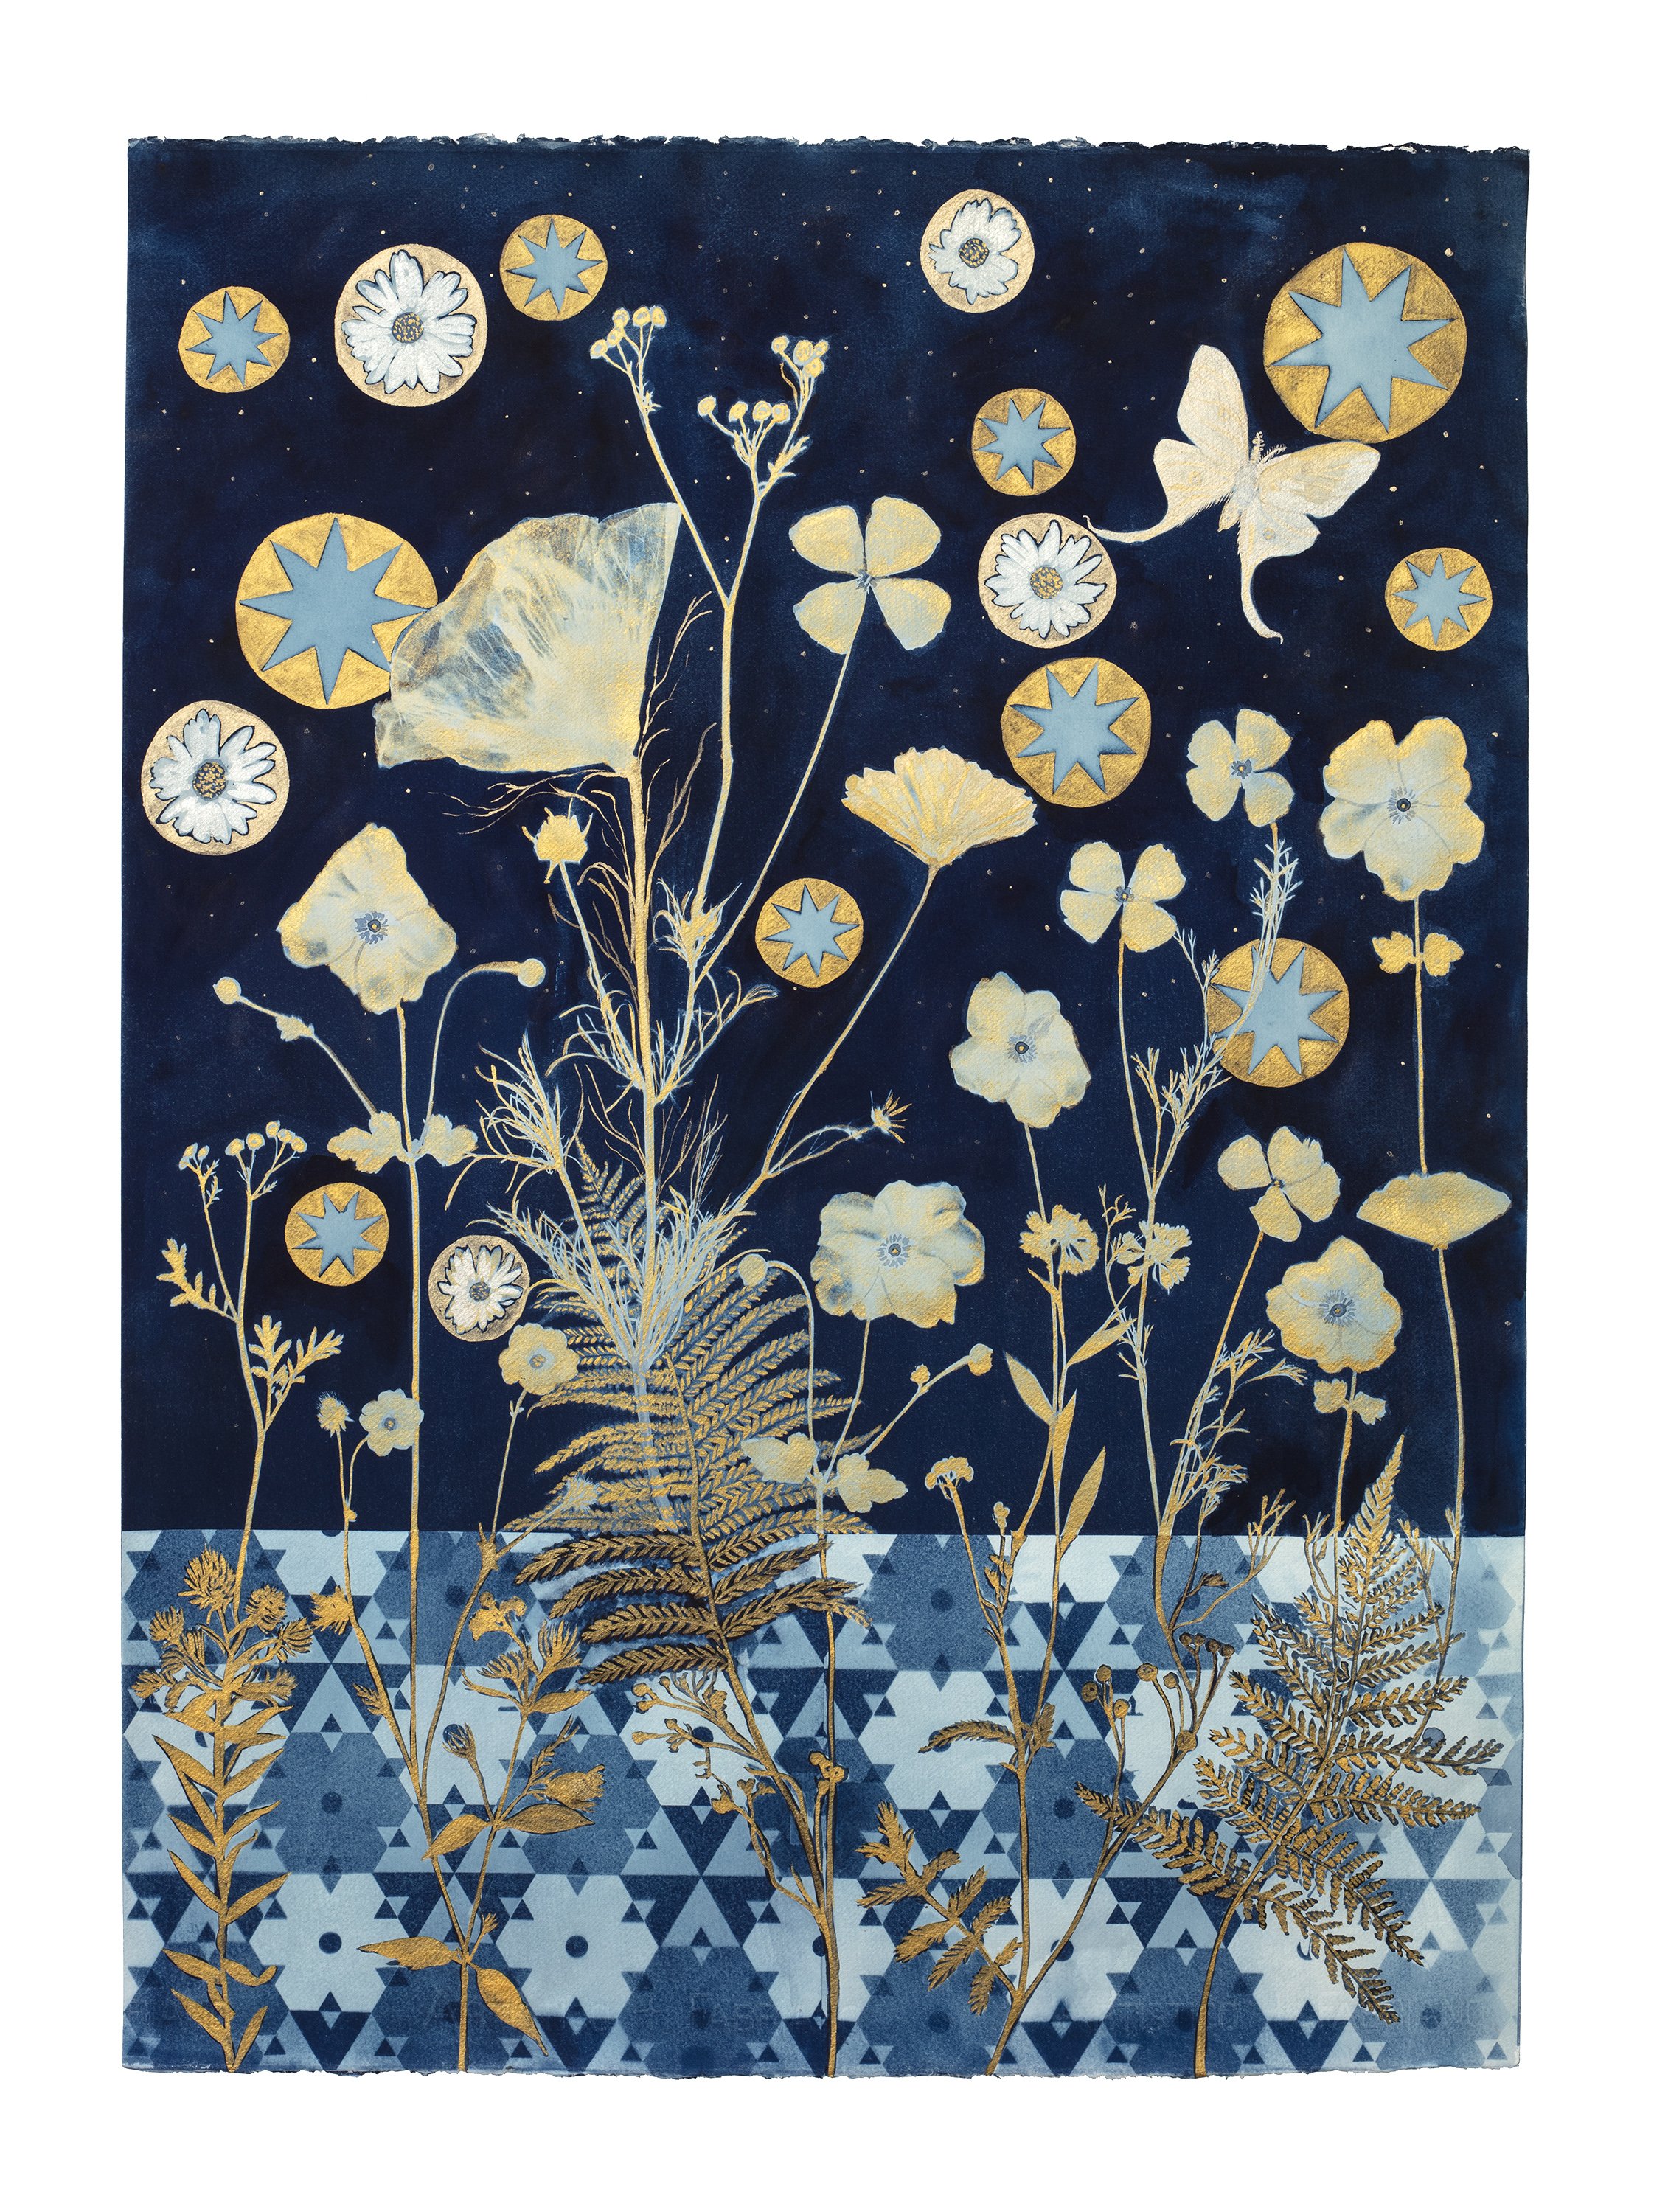 Cyanotype Painting (Gold Ferns, Anenomes, Daisies, Luna Moth, Stars, Floor Pattern)